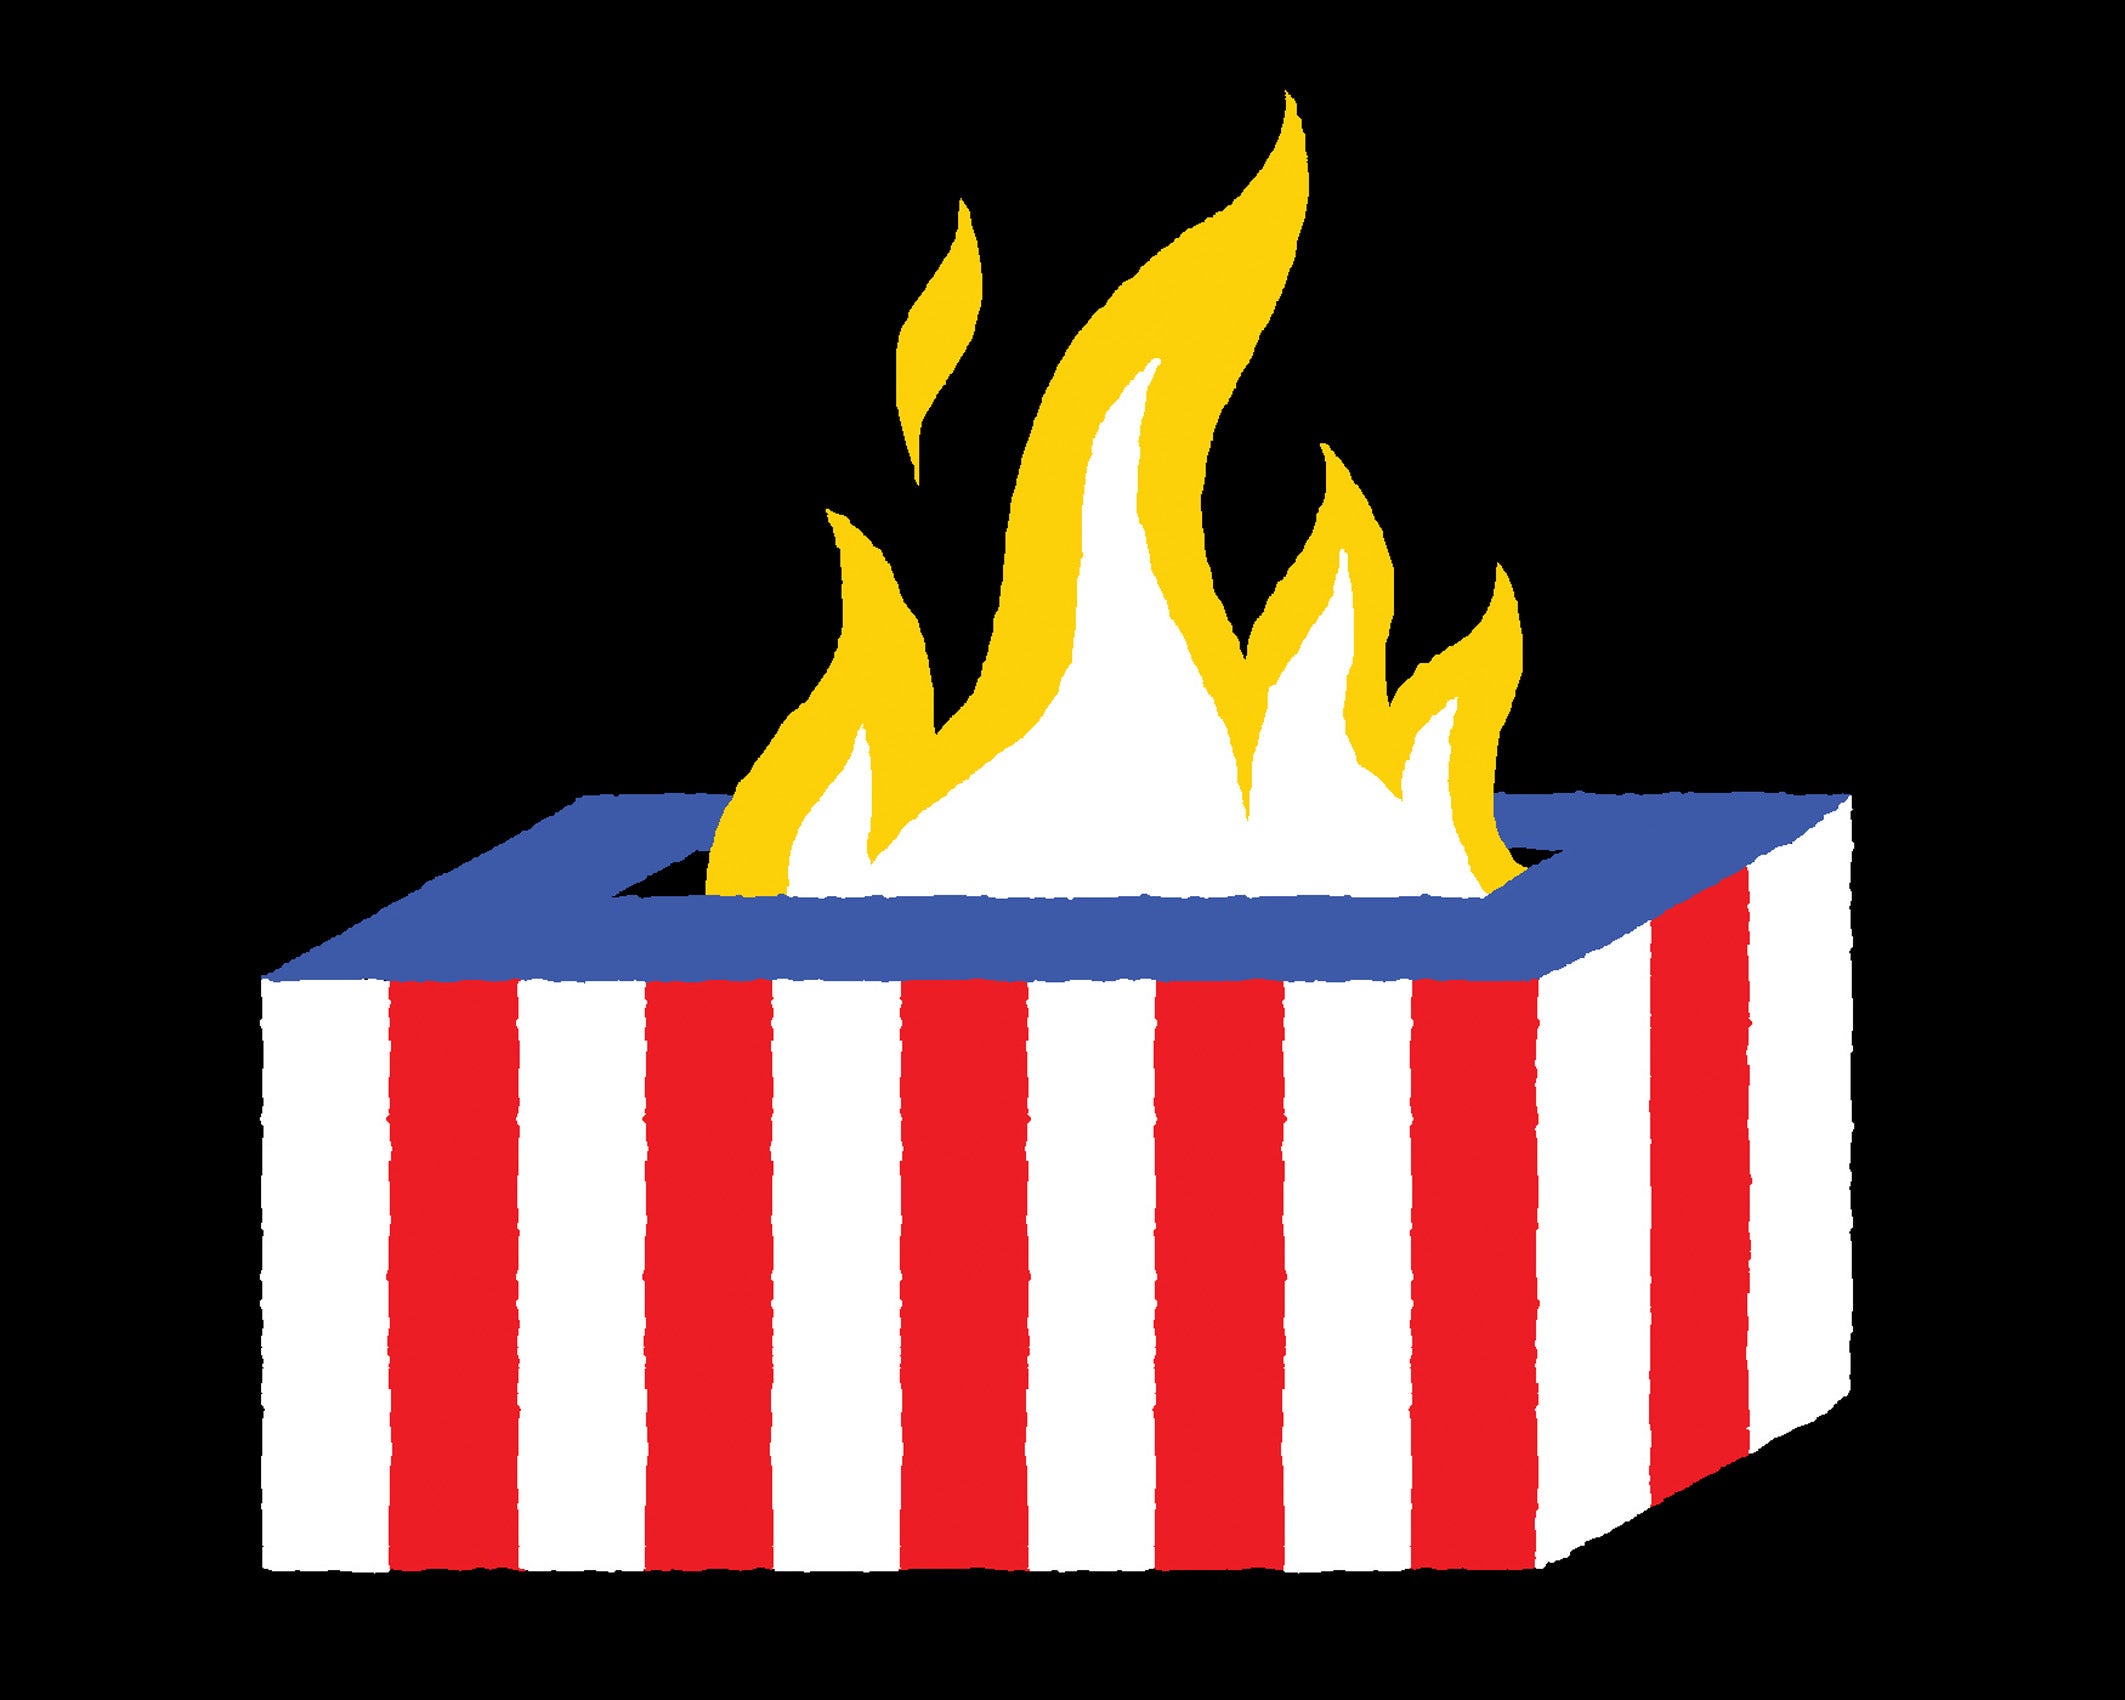 illustration of a ballot box on fire